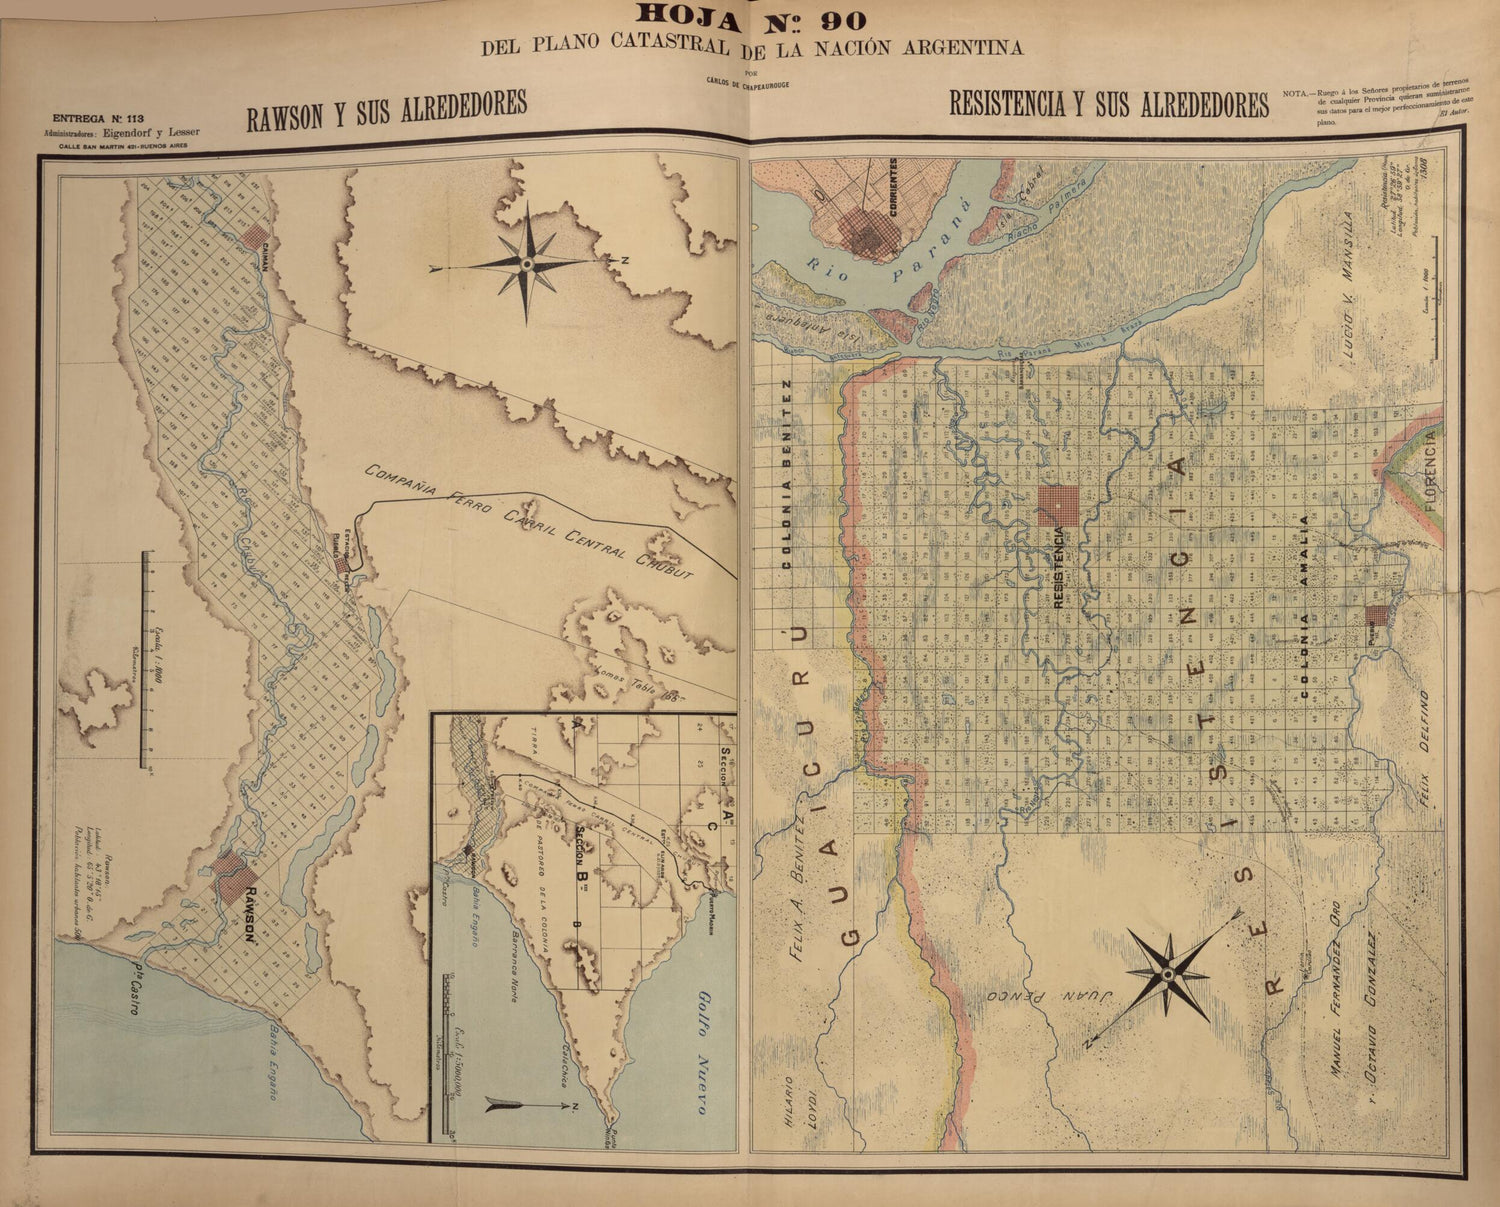 This old map of Plano Catastral De La Nacion Hoja No. 90 from República Argentina from 1905 was created by Carlos De Chapeaurouge in 1905